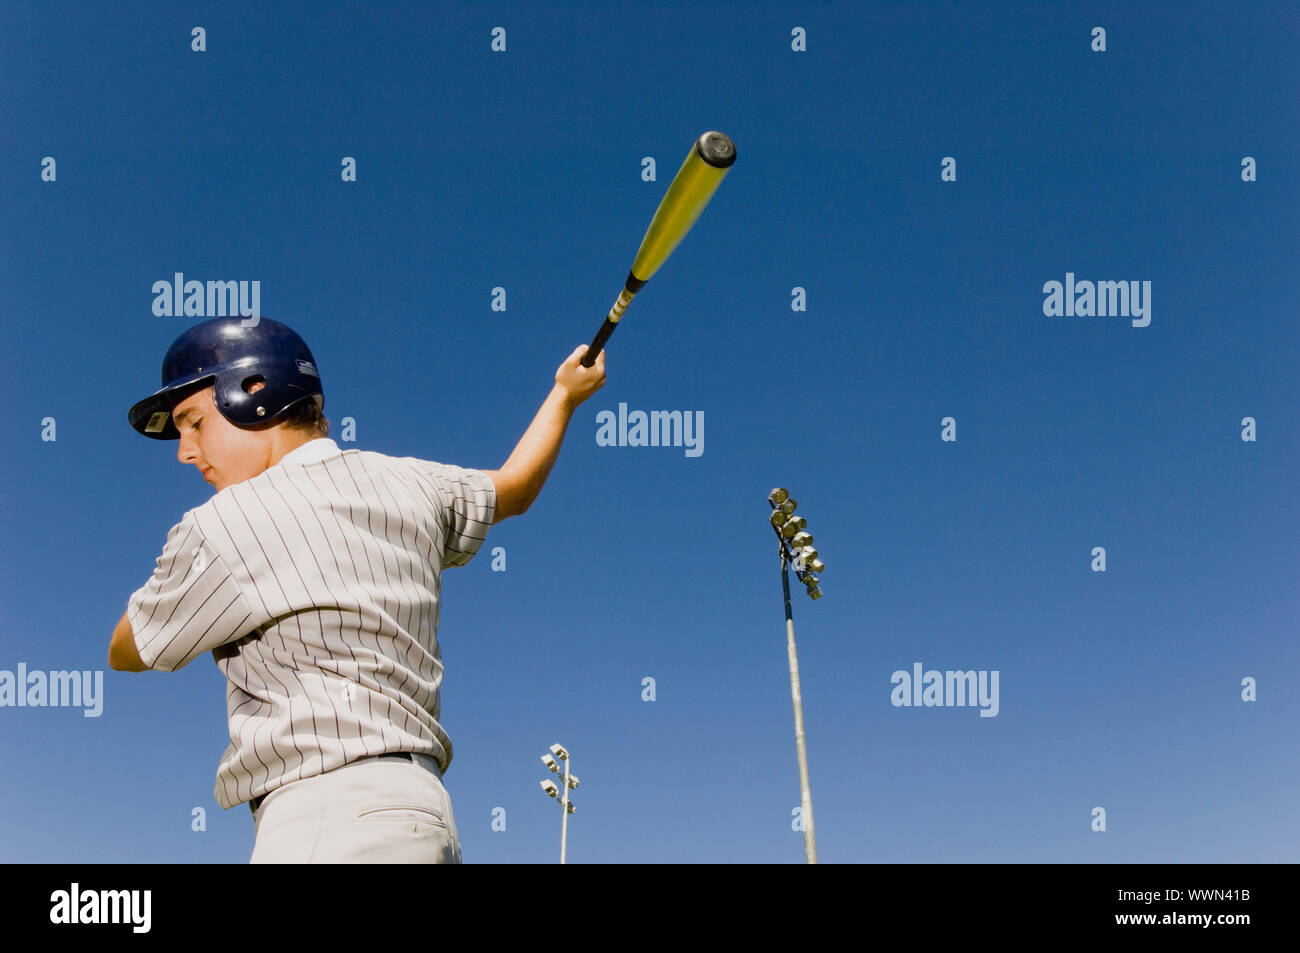 Batter Warming Up in Baseball Game Stock Photo